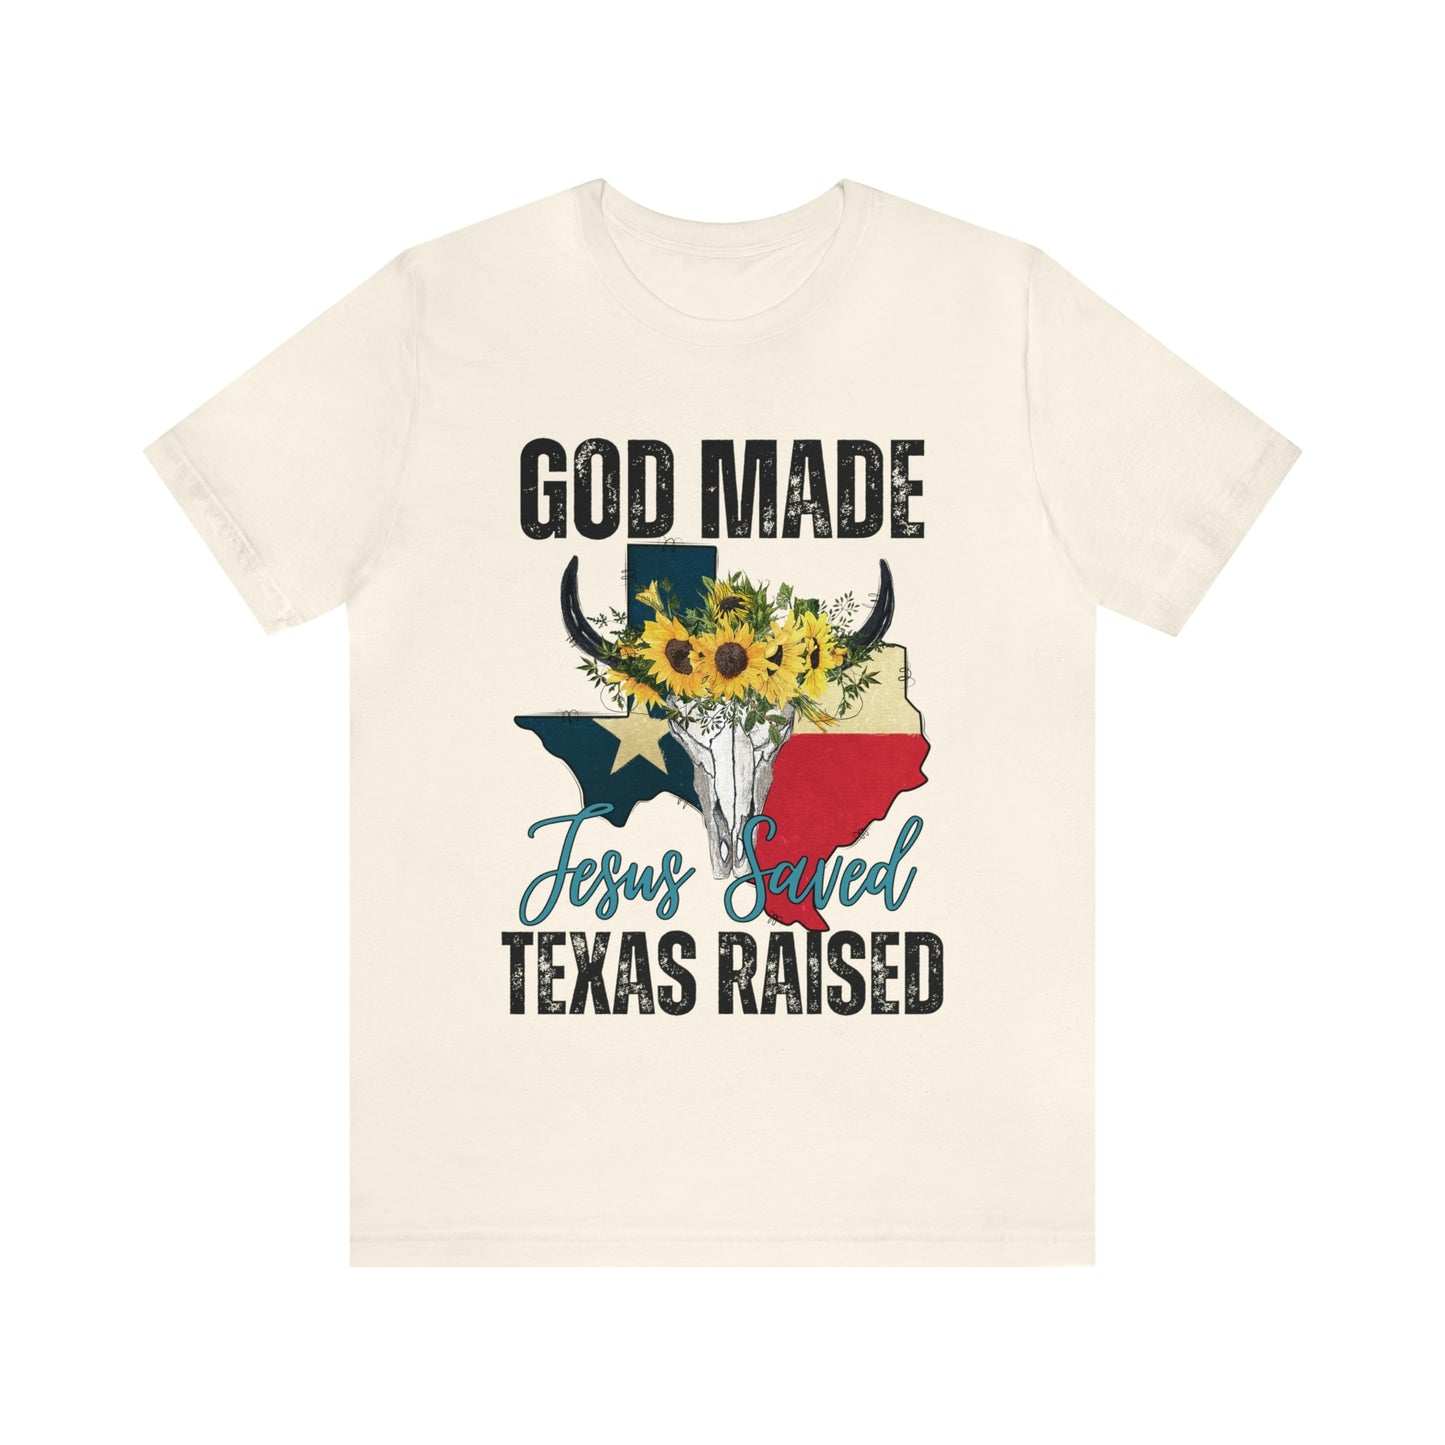 God Made, Texas Raised - Jersey Short Sleeve Tee